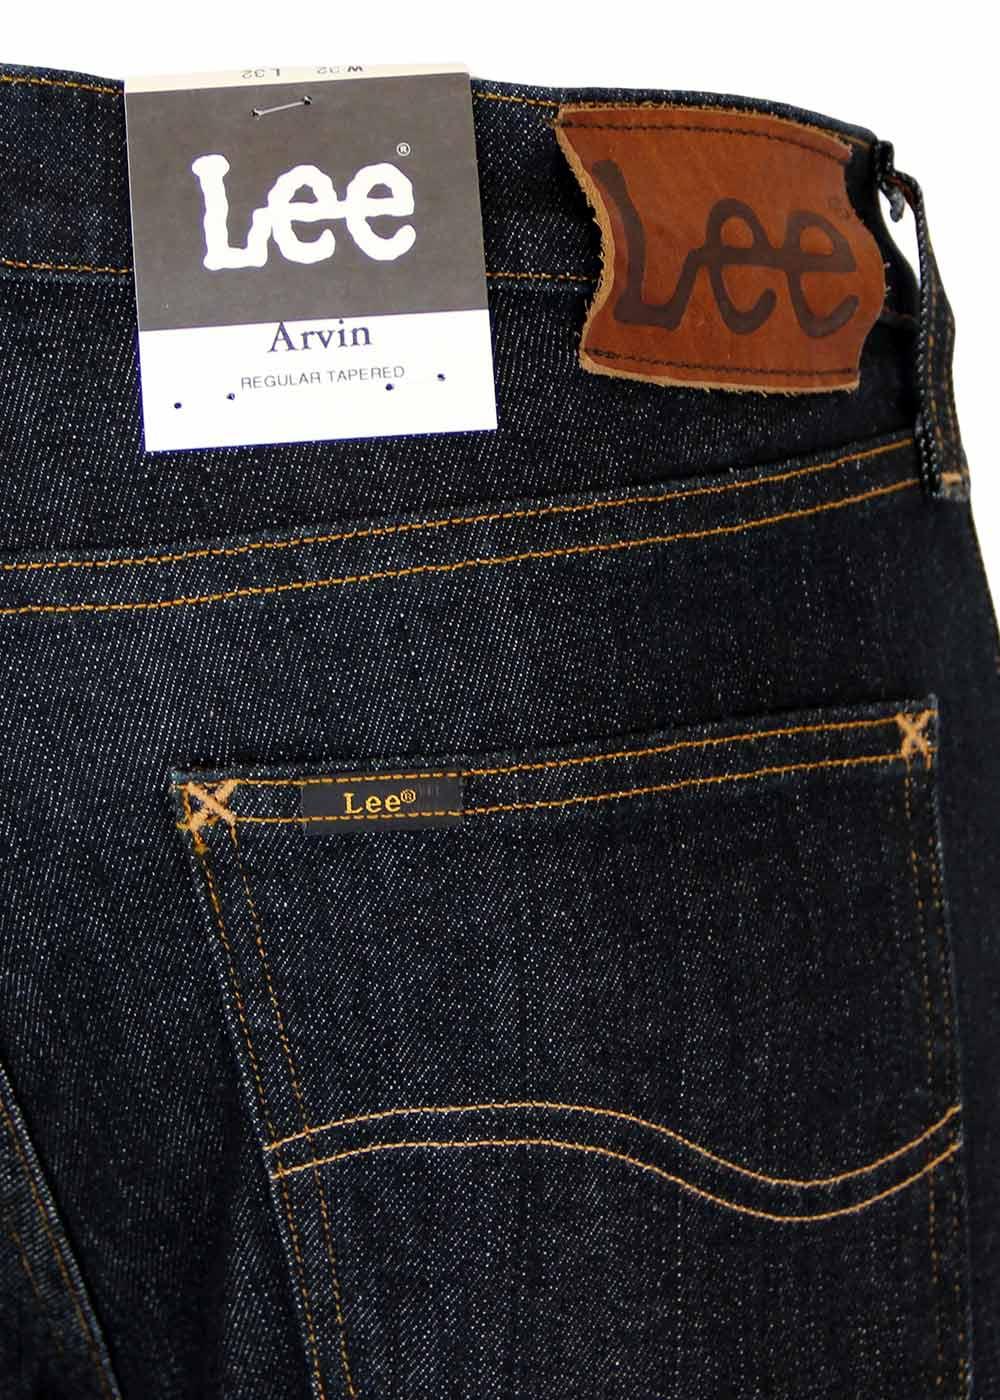 LEE Arvin Retro 60s Mod Clean Denim Regular Tapered Jeans